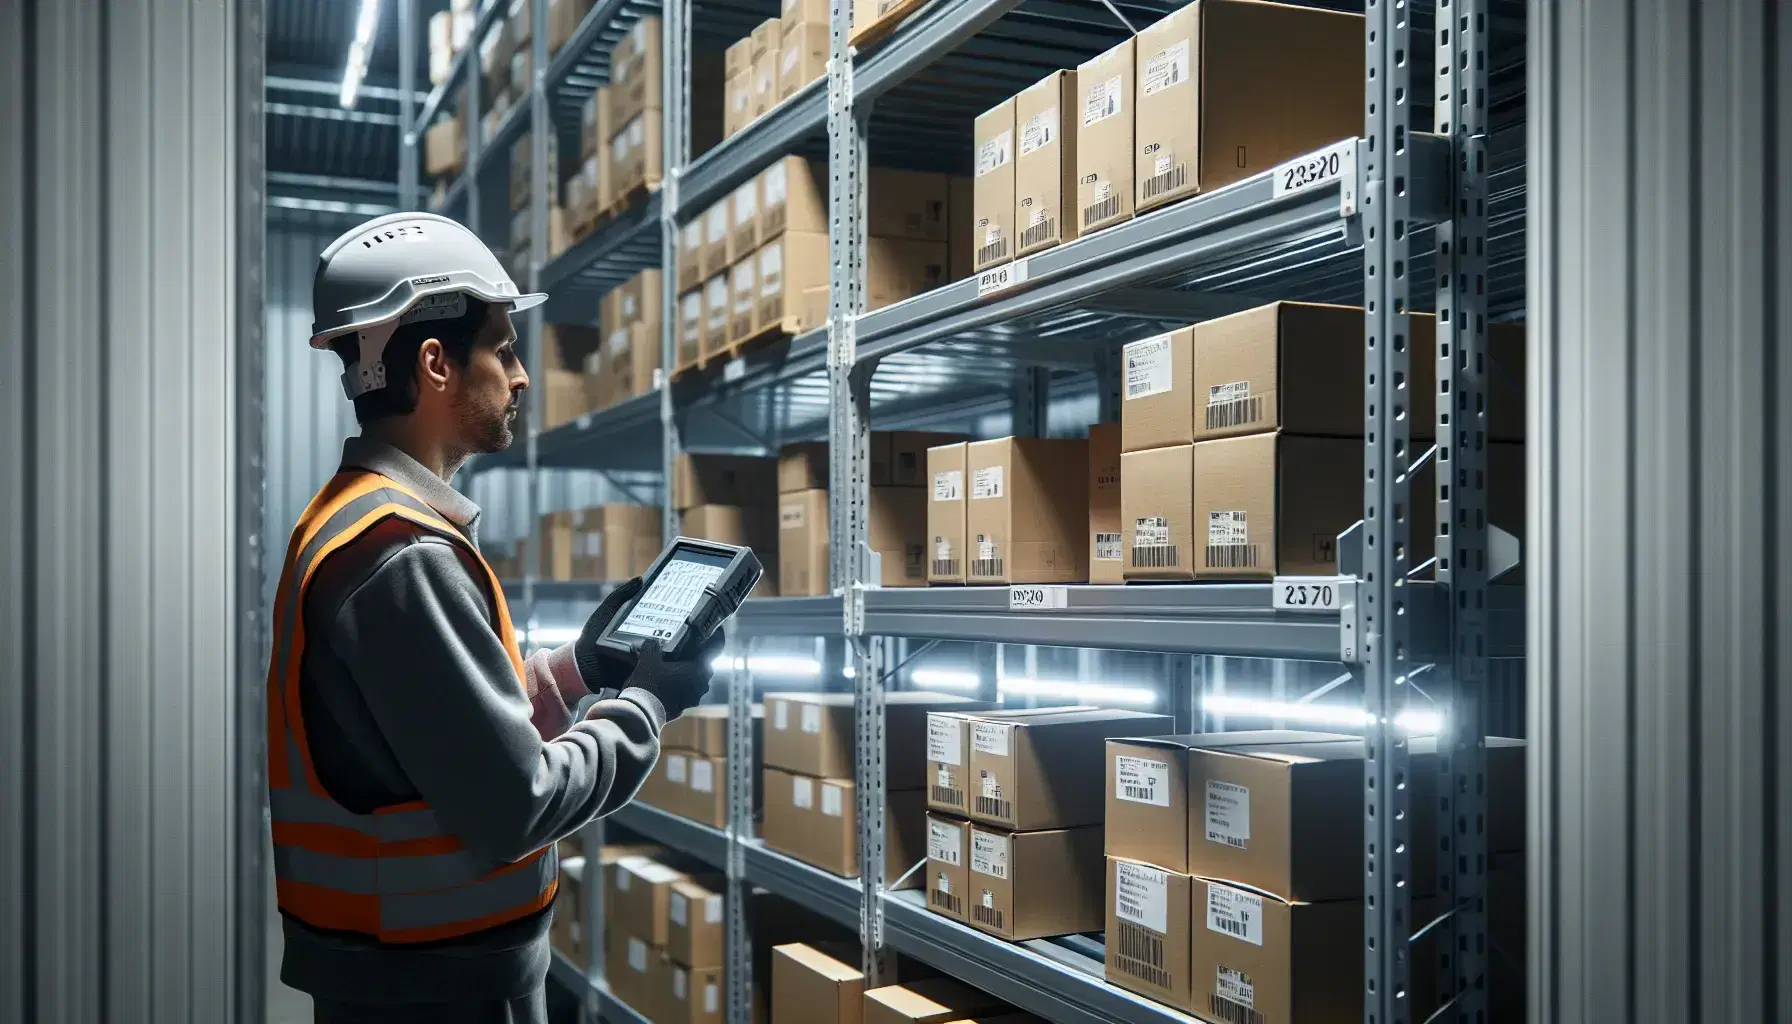 Estante metálico con cajas de cartón en almacén iluminado, trabajador con chaleco reflectante y casco usando dispositivo electrónico.